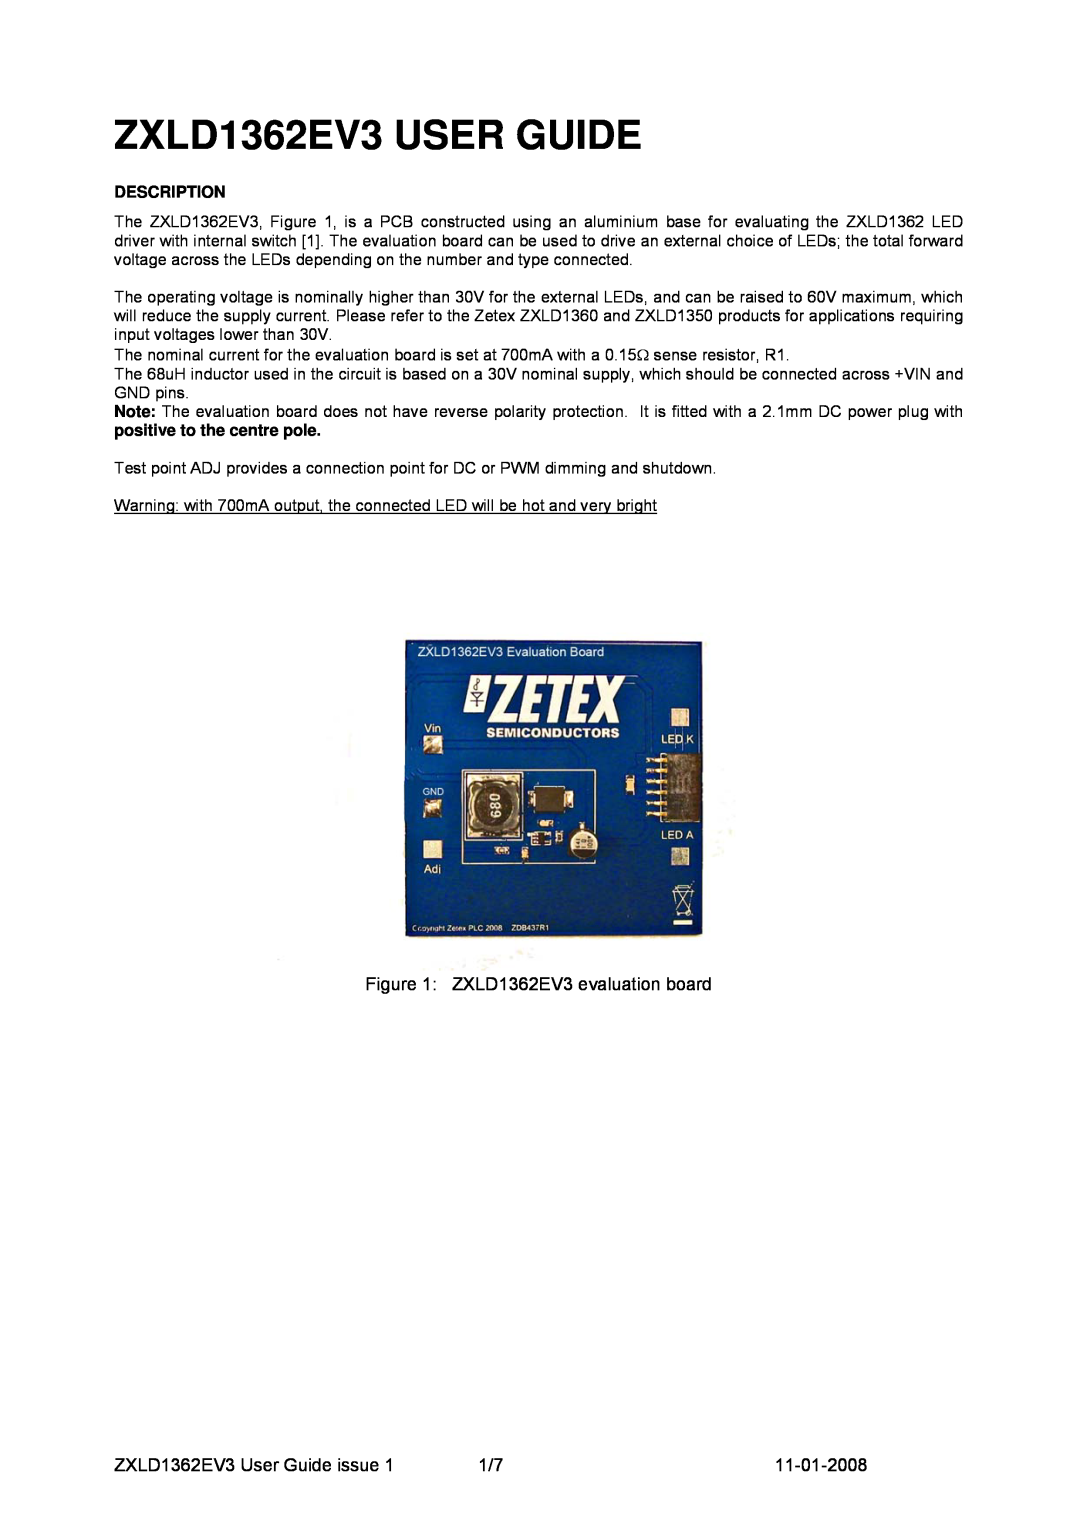 Zetex Semiconductors PLC manual ZXLD1362EV3 evaluation board, ZXLD1362EV3 User Guide issue, 11-01-2008 